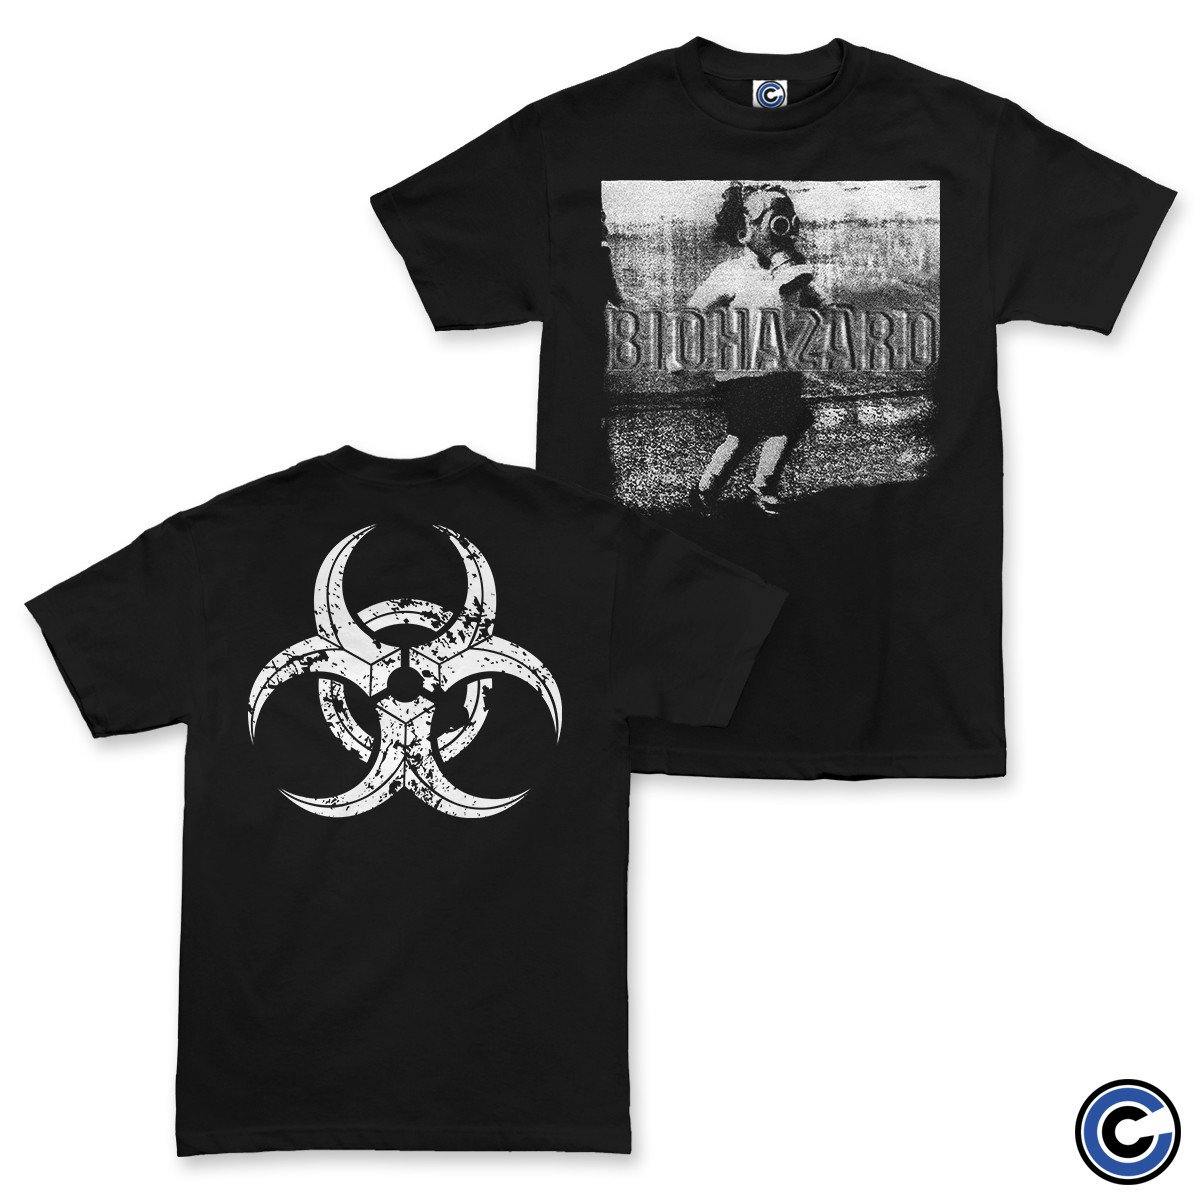 Buy – Biohazard "SOTWA" Shirt – Band & Music Merch – Cold Cuts Merch